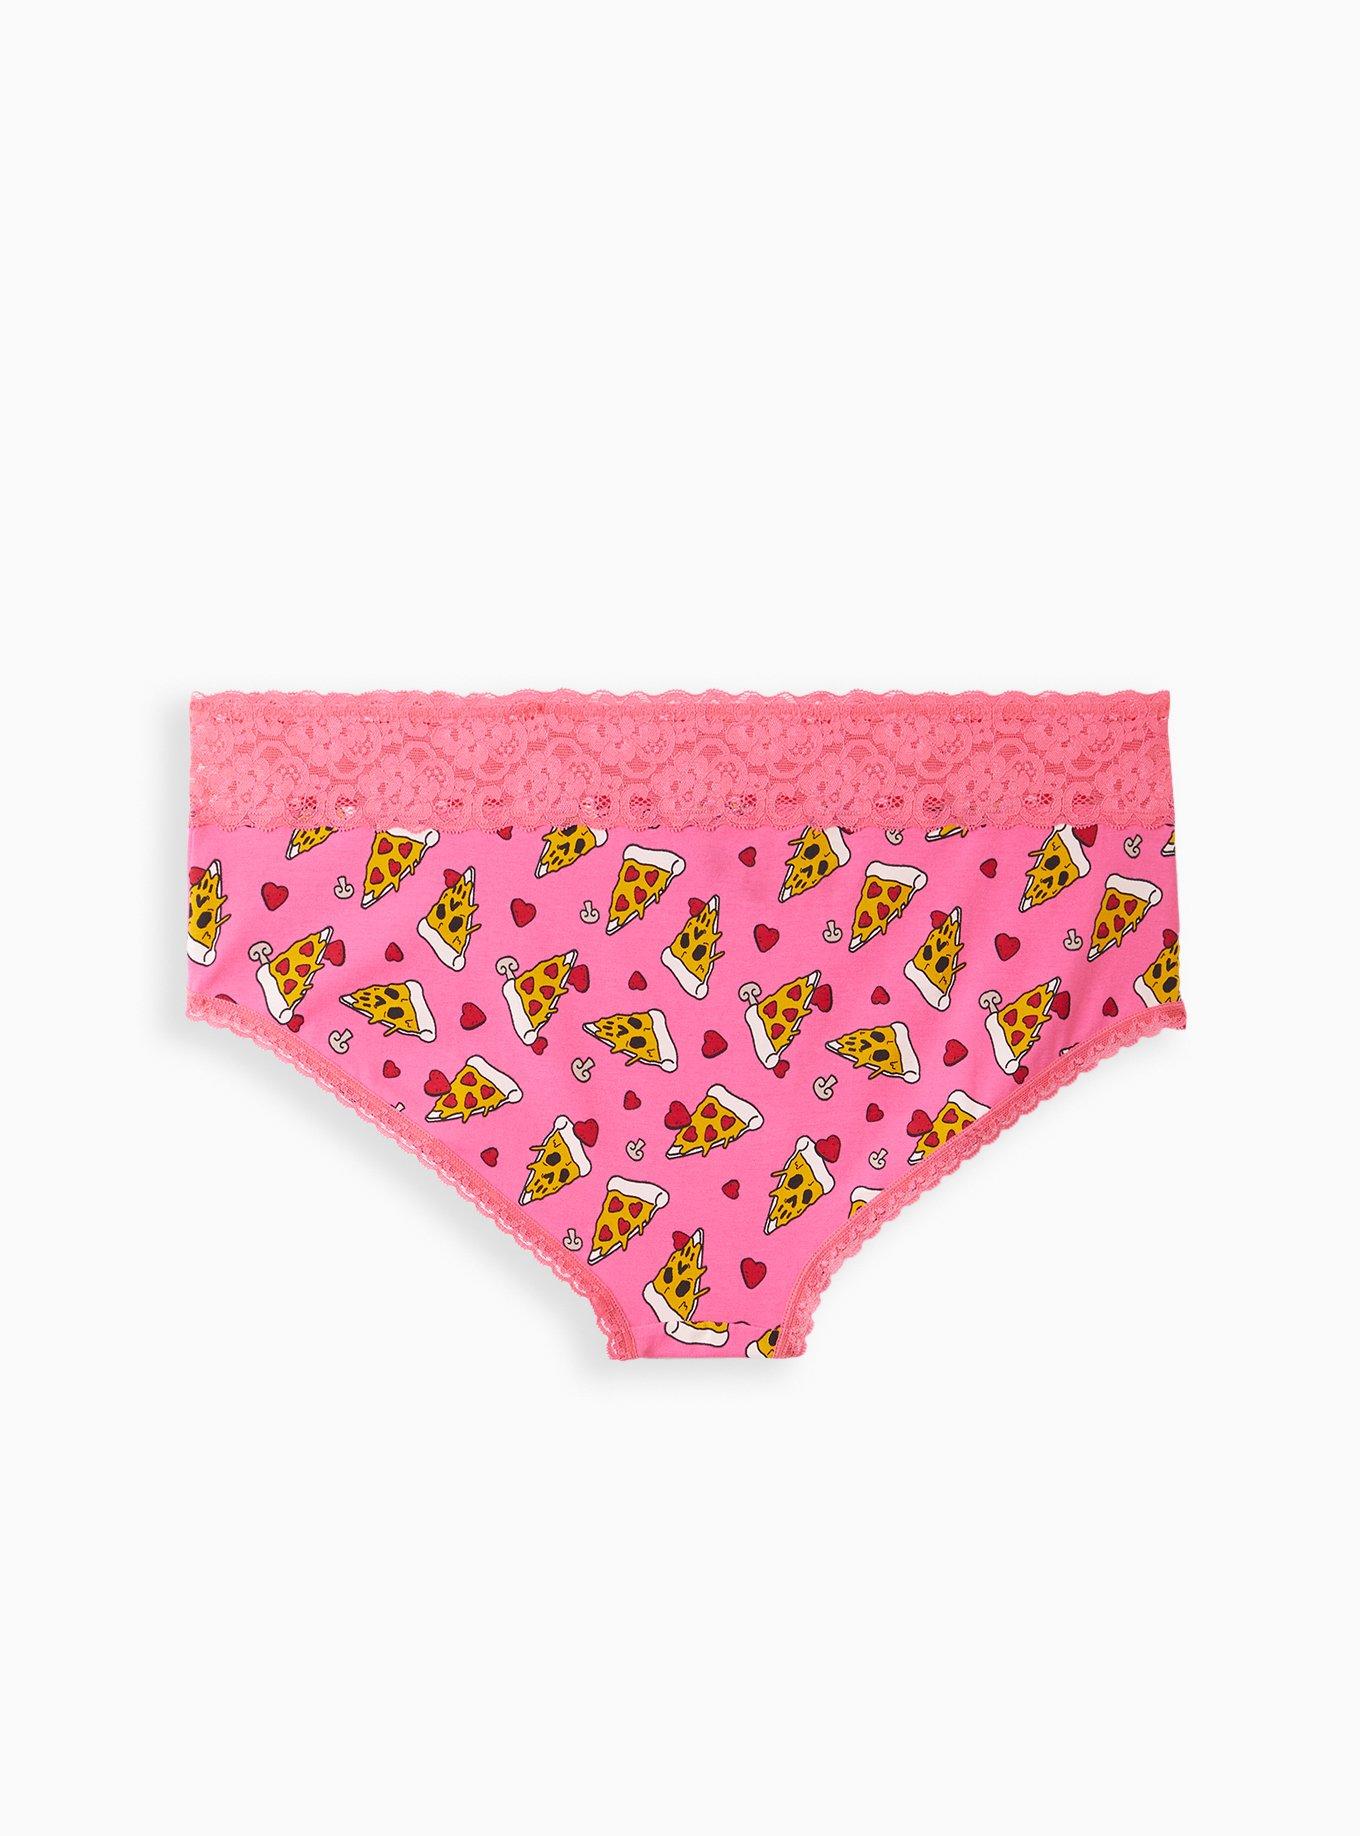 NWT Native Intimates Pink Thong Panties Sz S (5) 95% Cotton 5% Spandex